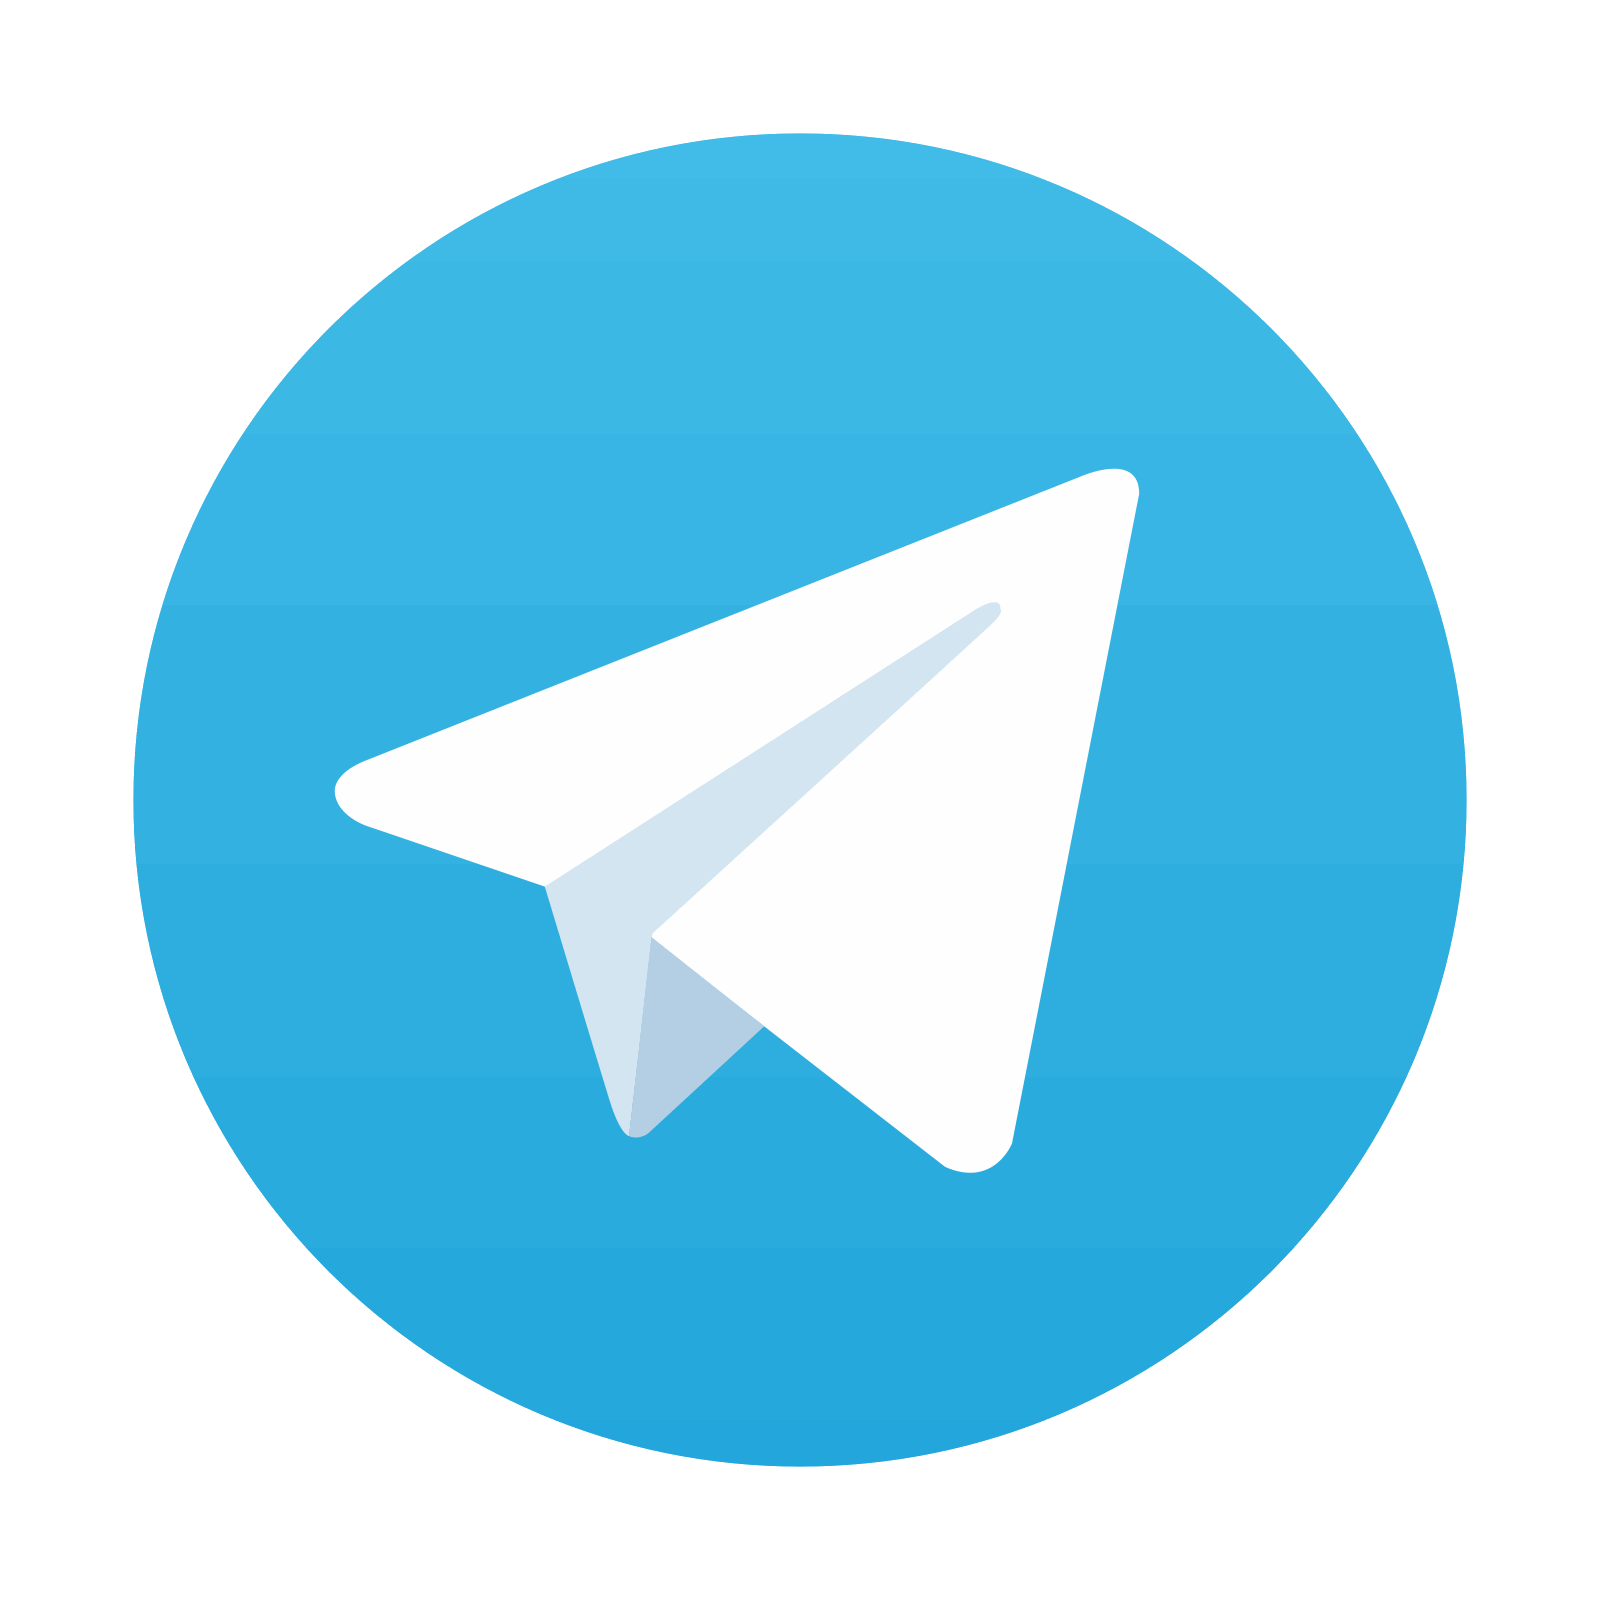 Forex news alerts for telegram